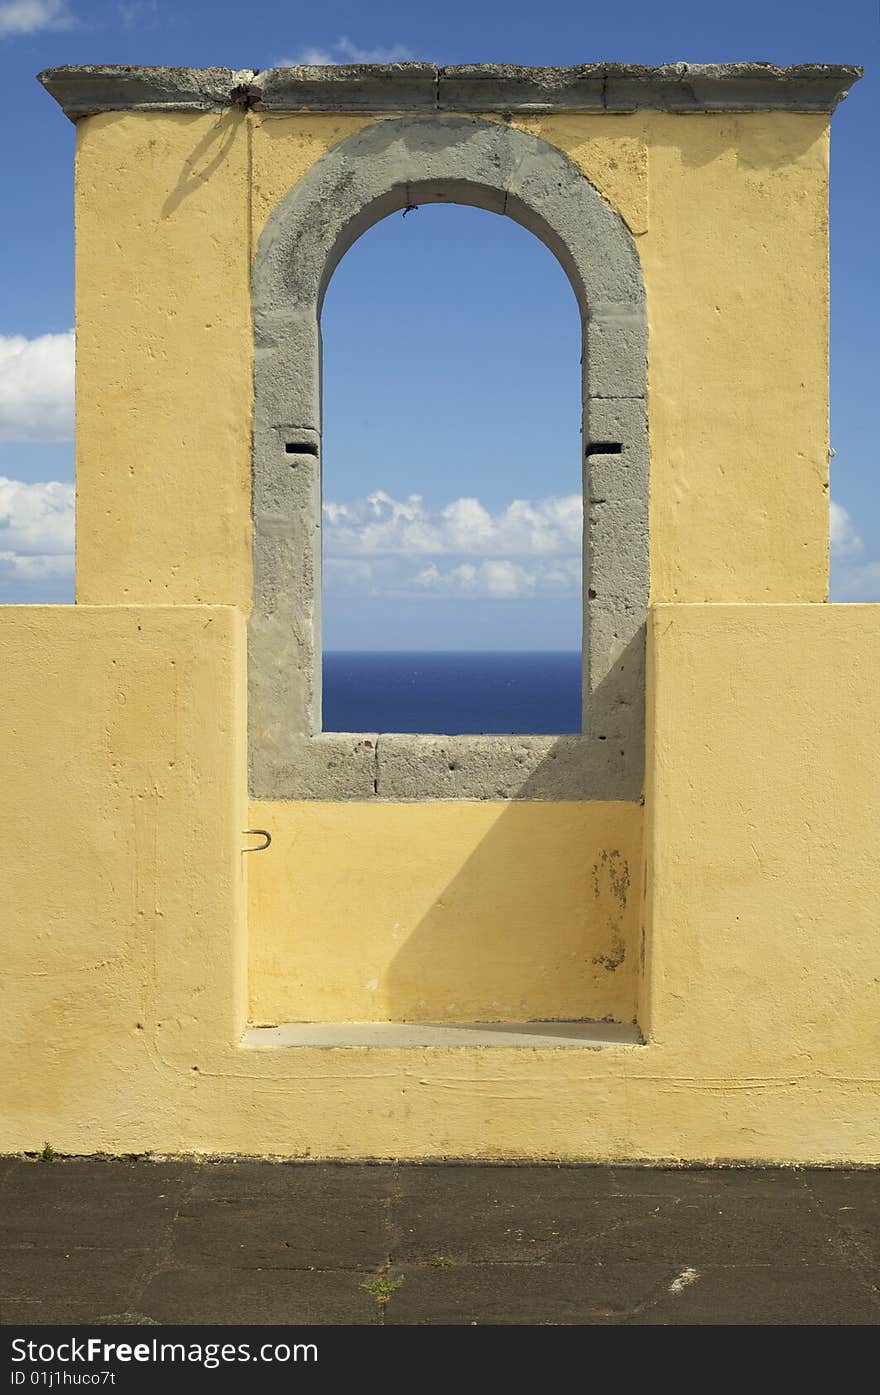 Window overlooking the sea in Madeira Island